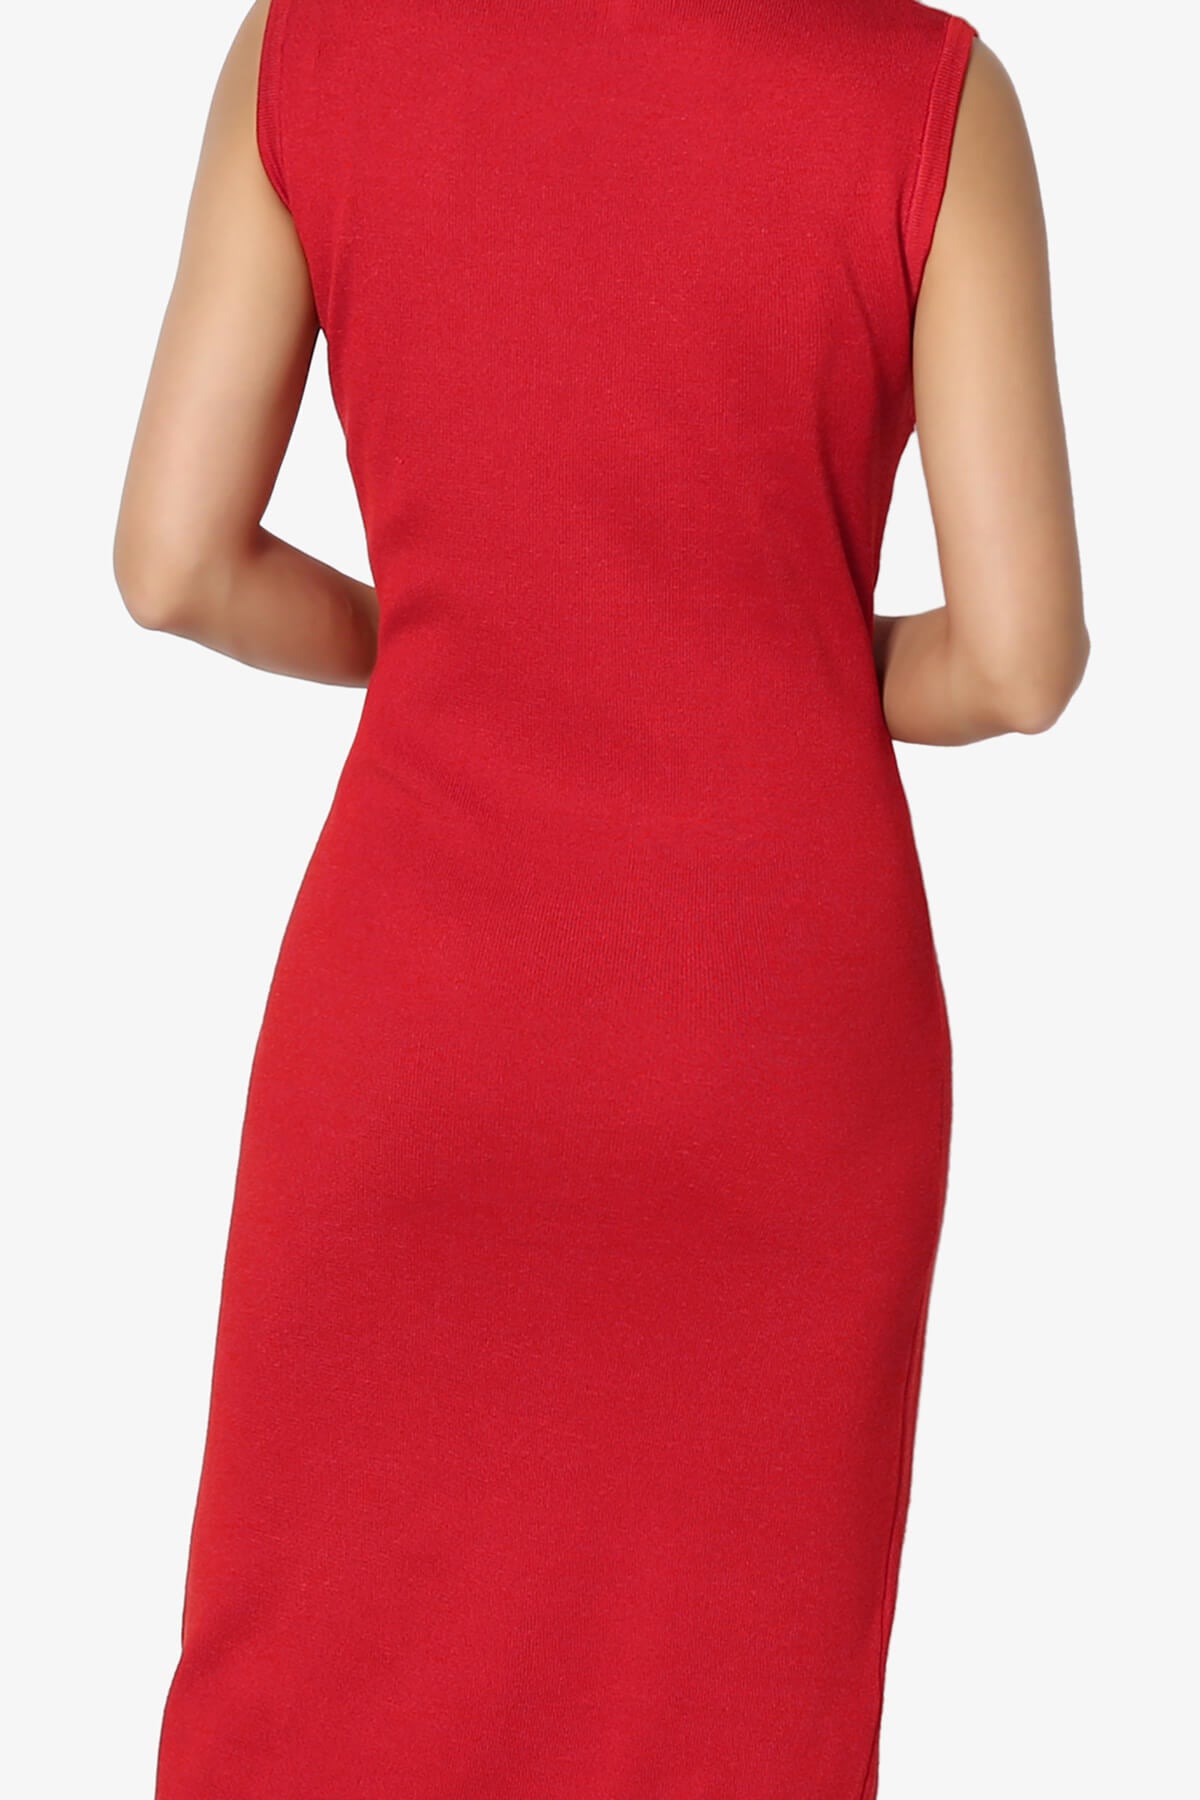 Jordyn Lace-Up Knit Midi Dress RED_6